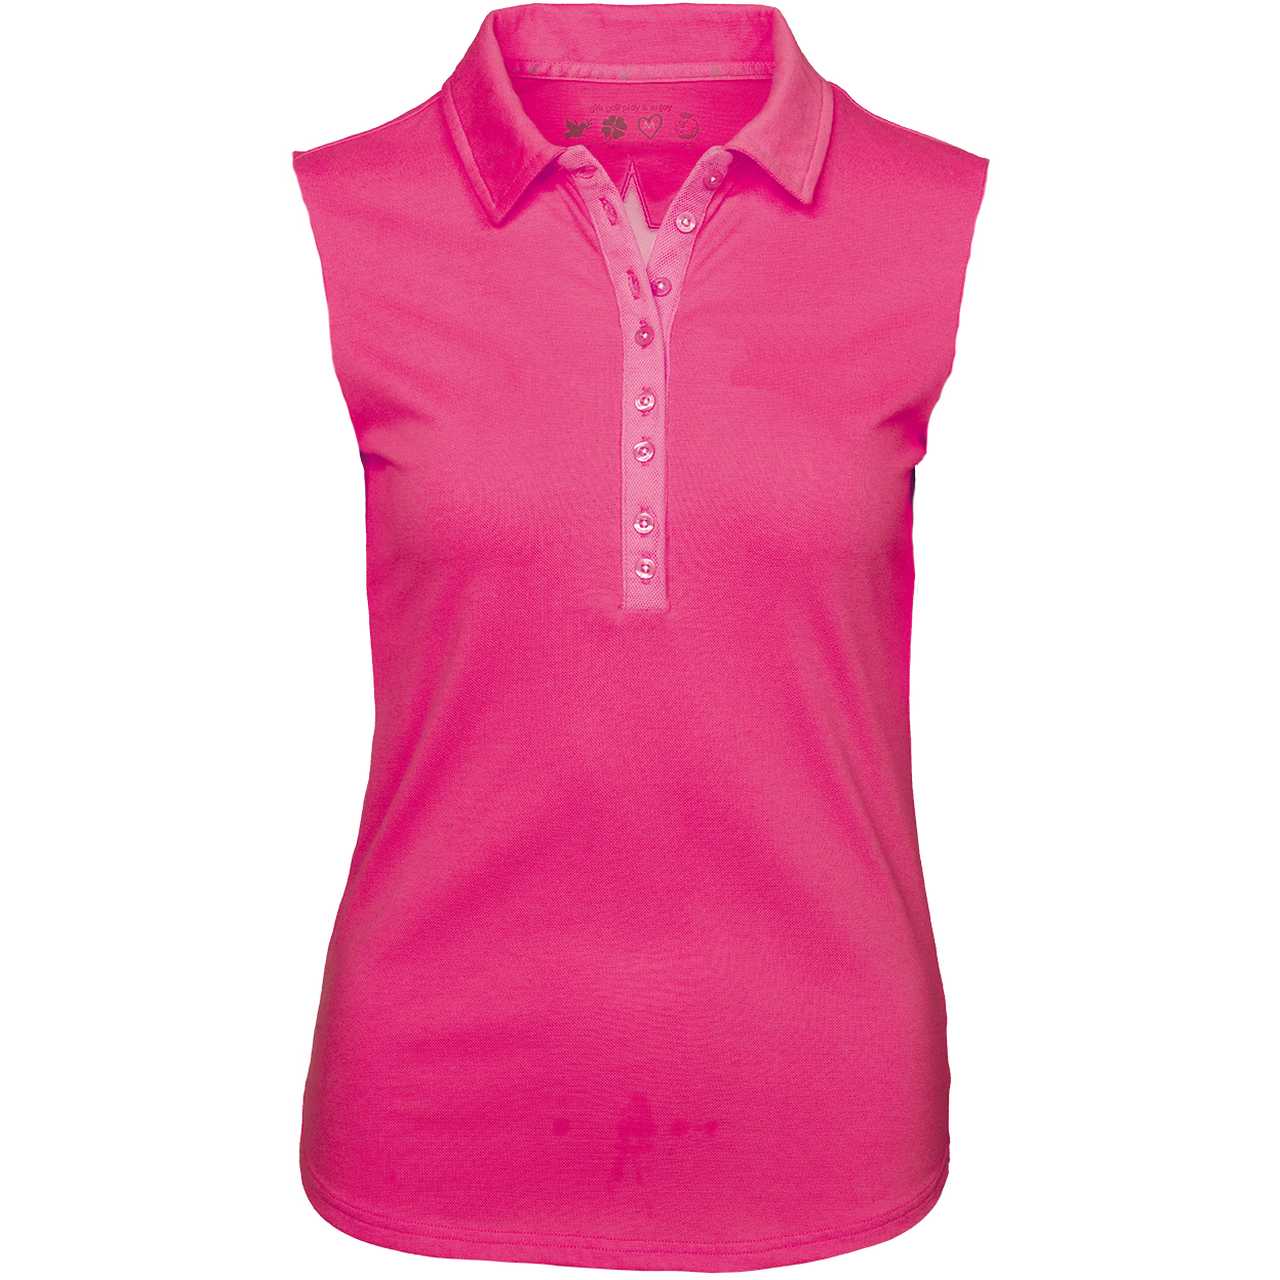 girls golf Polo 'basic STAR
SYLVIA' (pink)